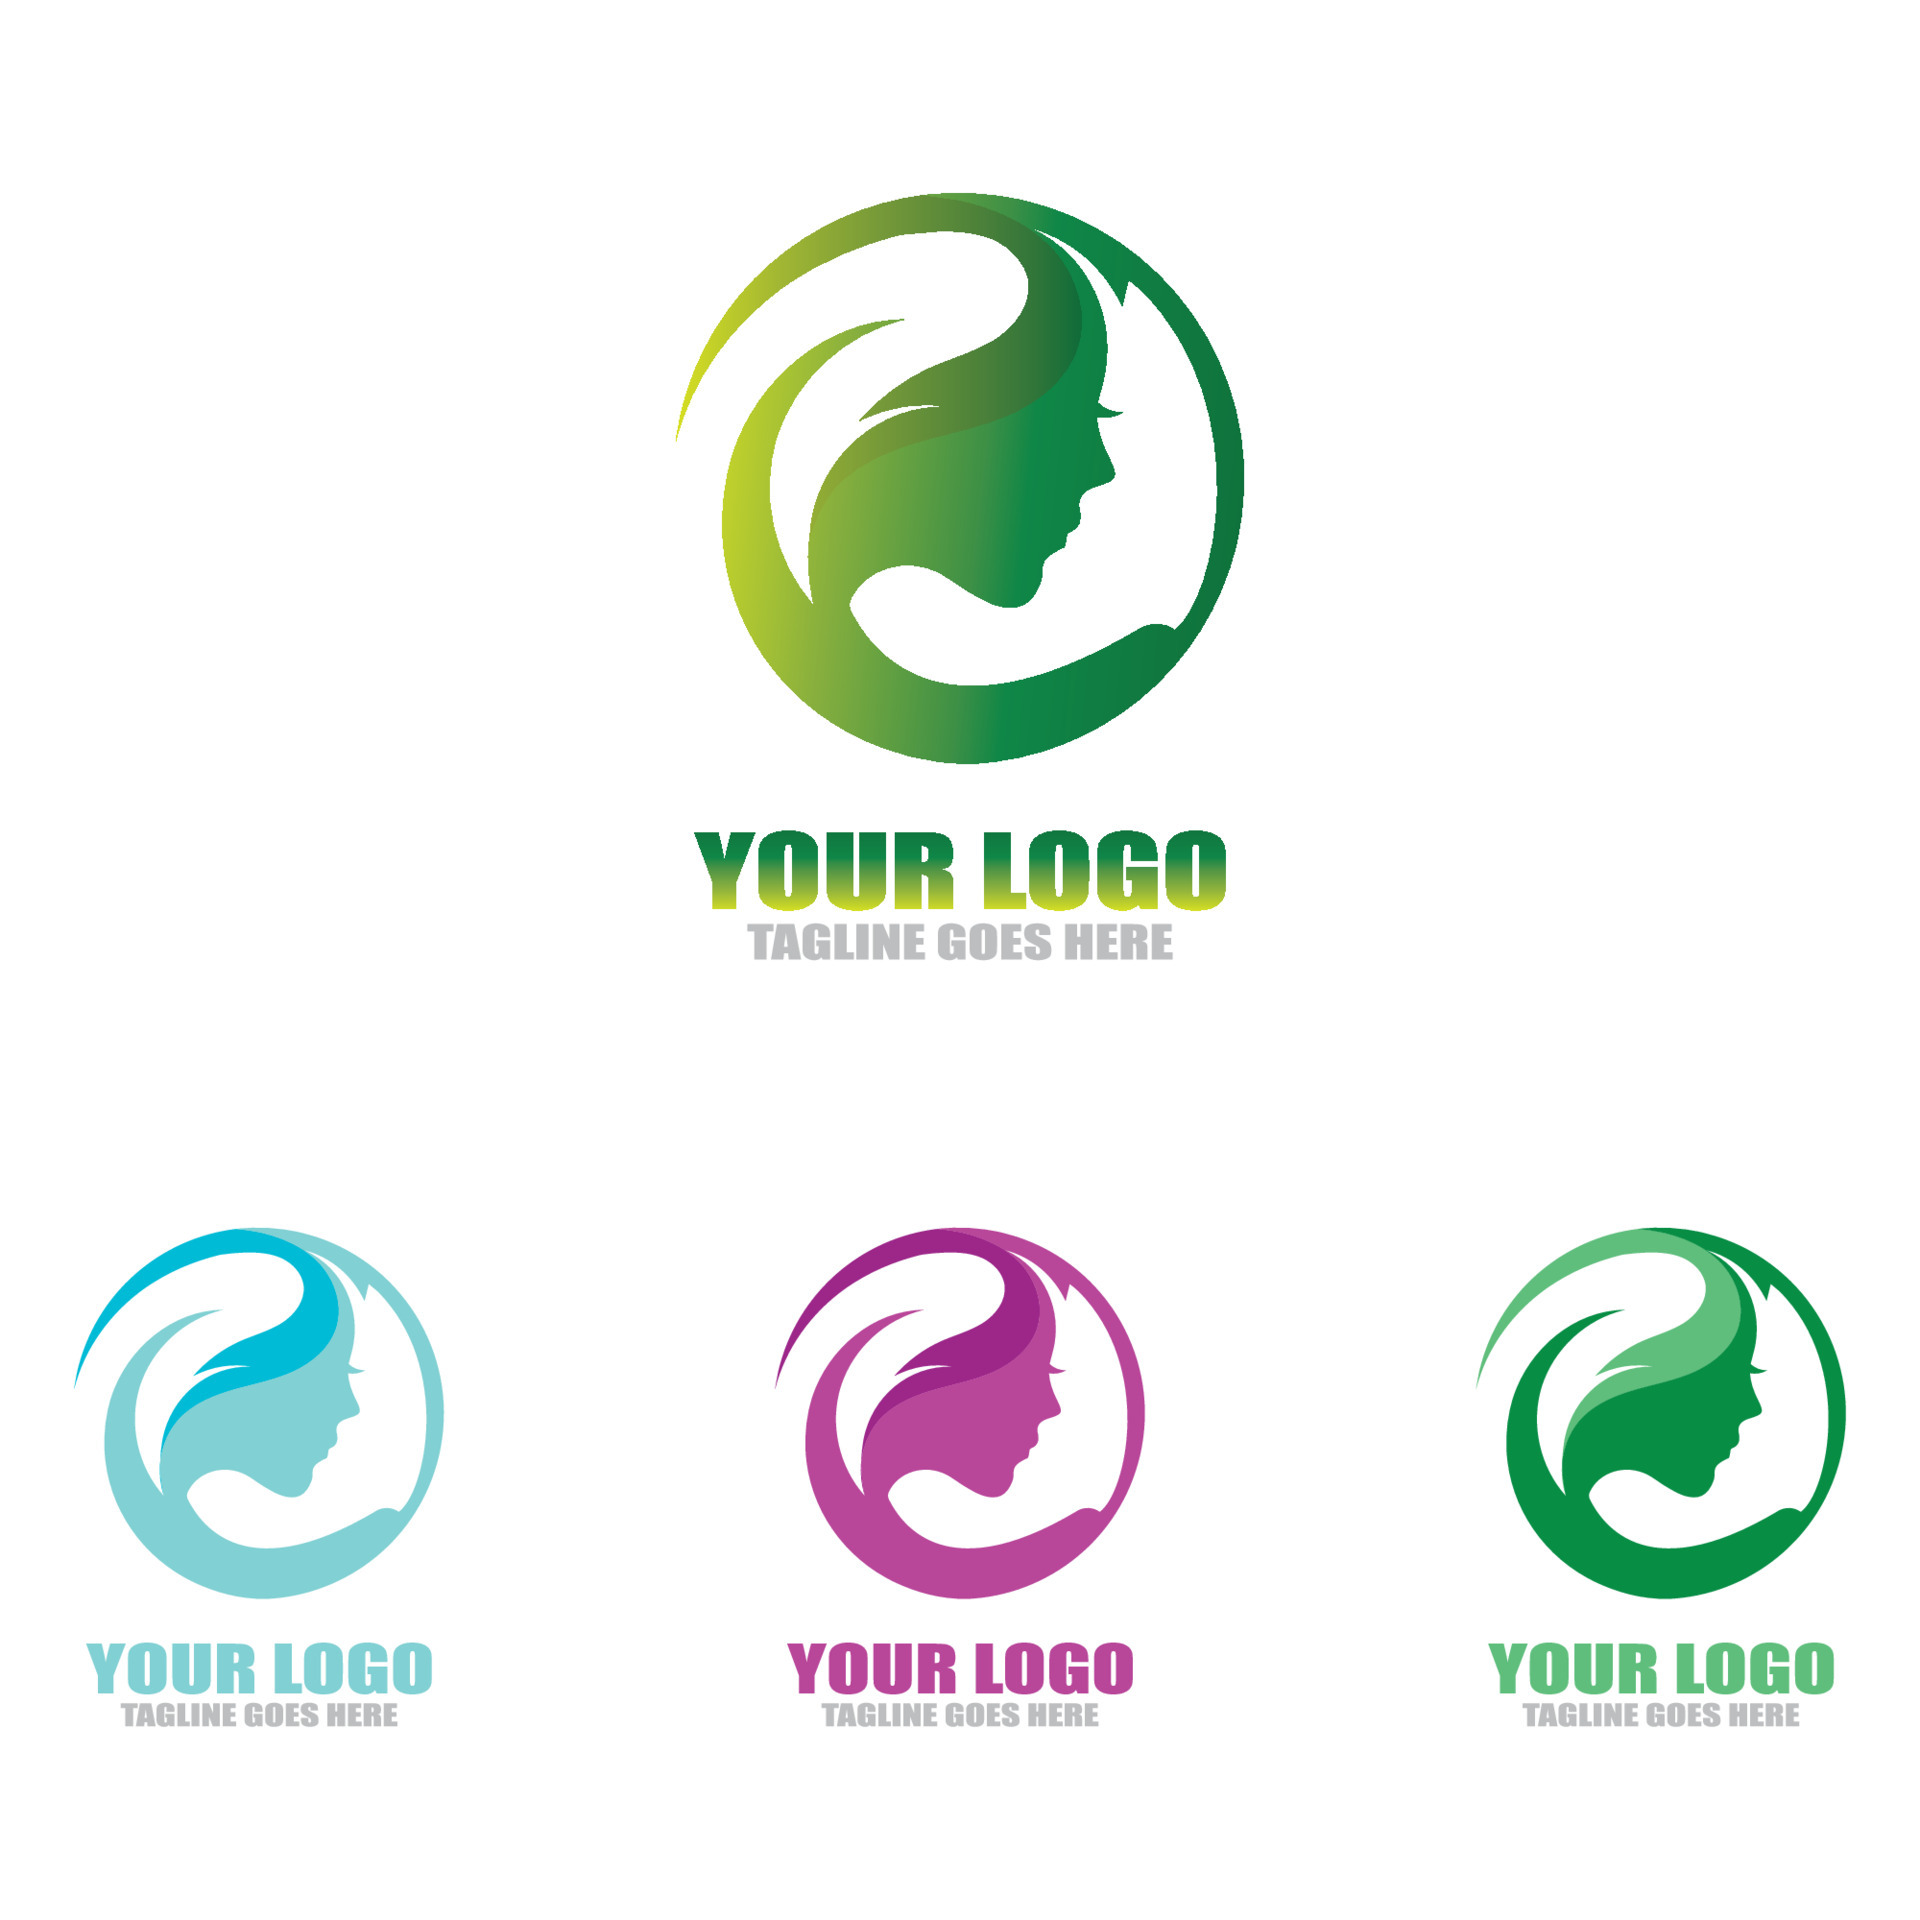 Premium Vector  Fresh beauty logo template design